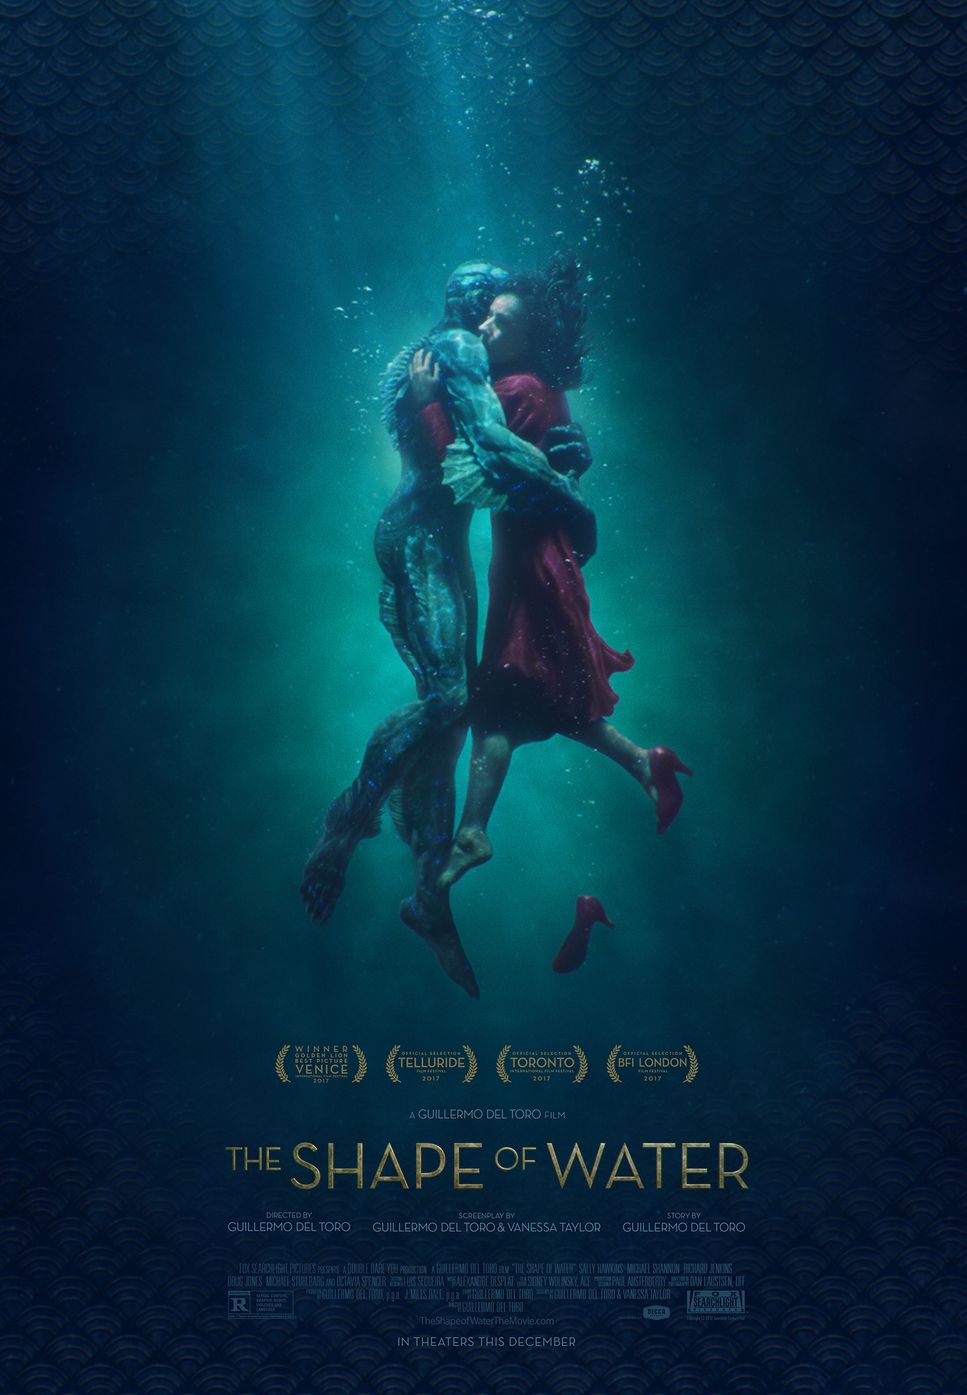 Alexandre Desplat - The Shape of Water (<The Shape of Water> OST) by Seoyool